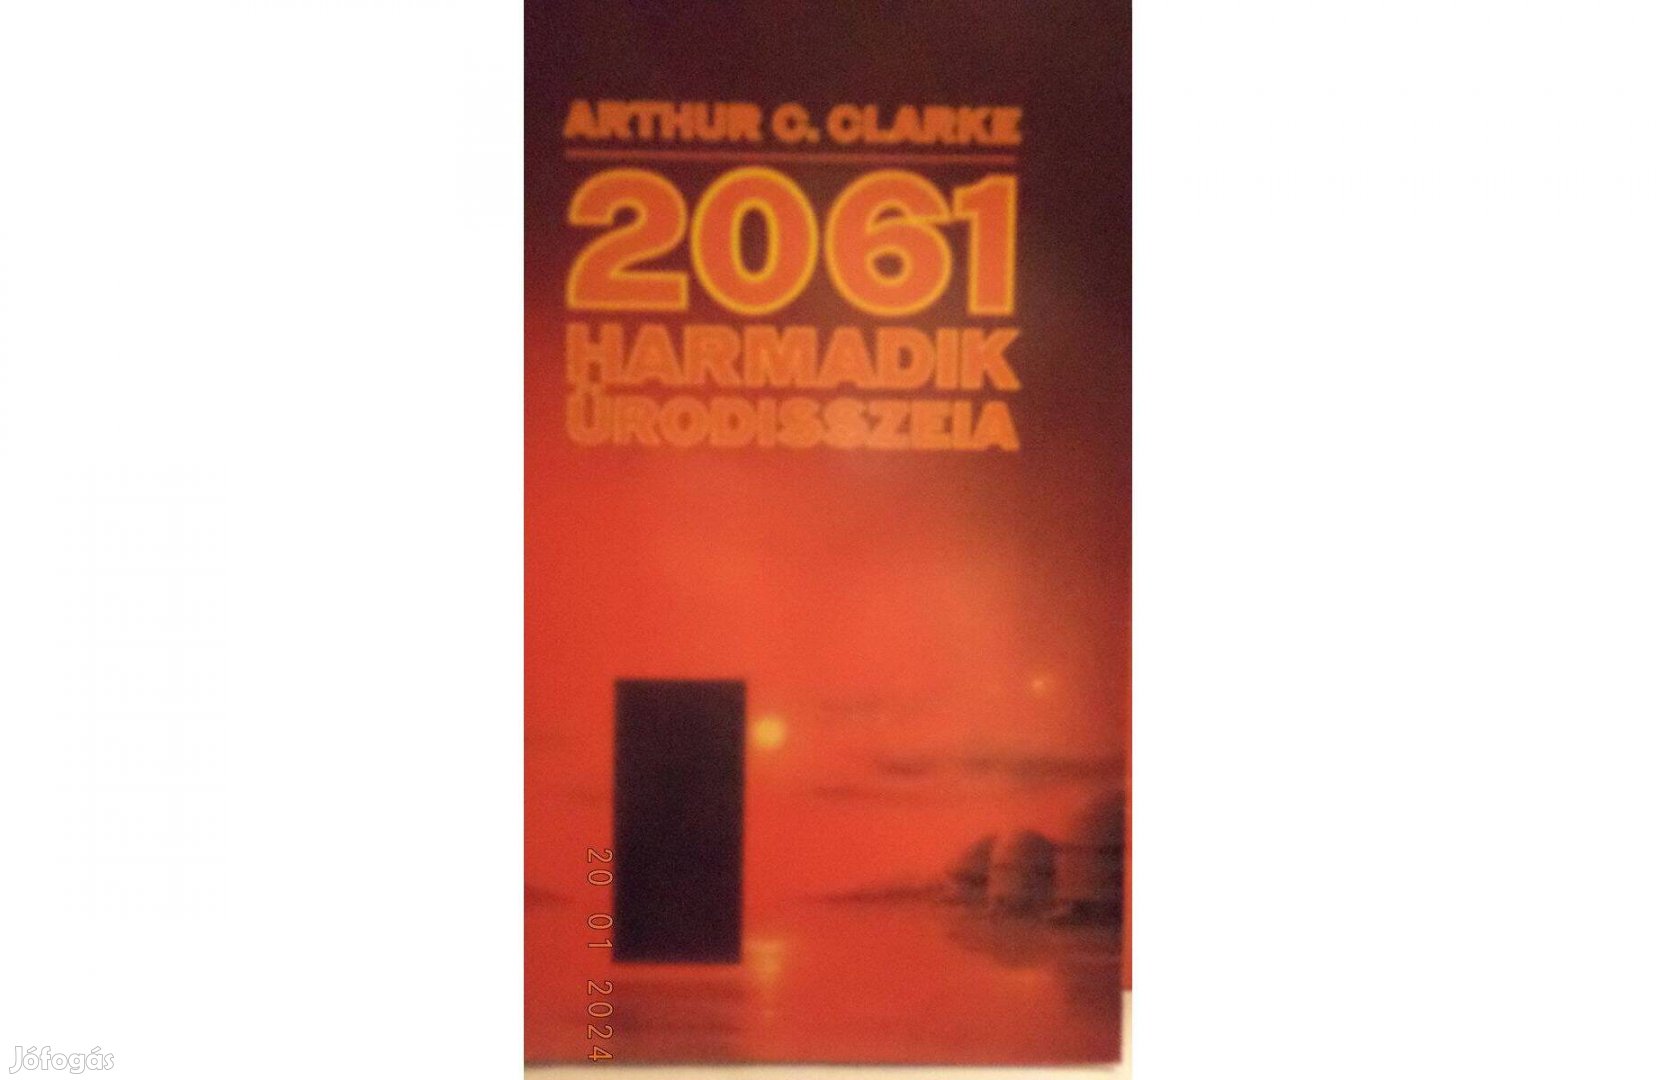 Arthur C. Clarke: 2061 harmadik űrodisszeia